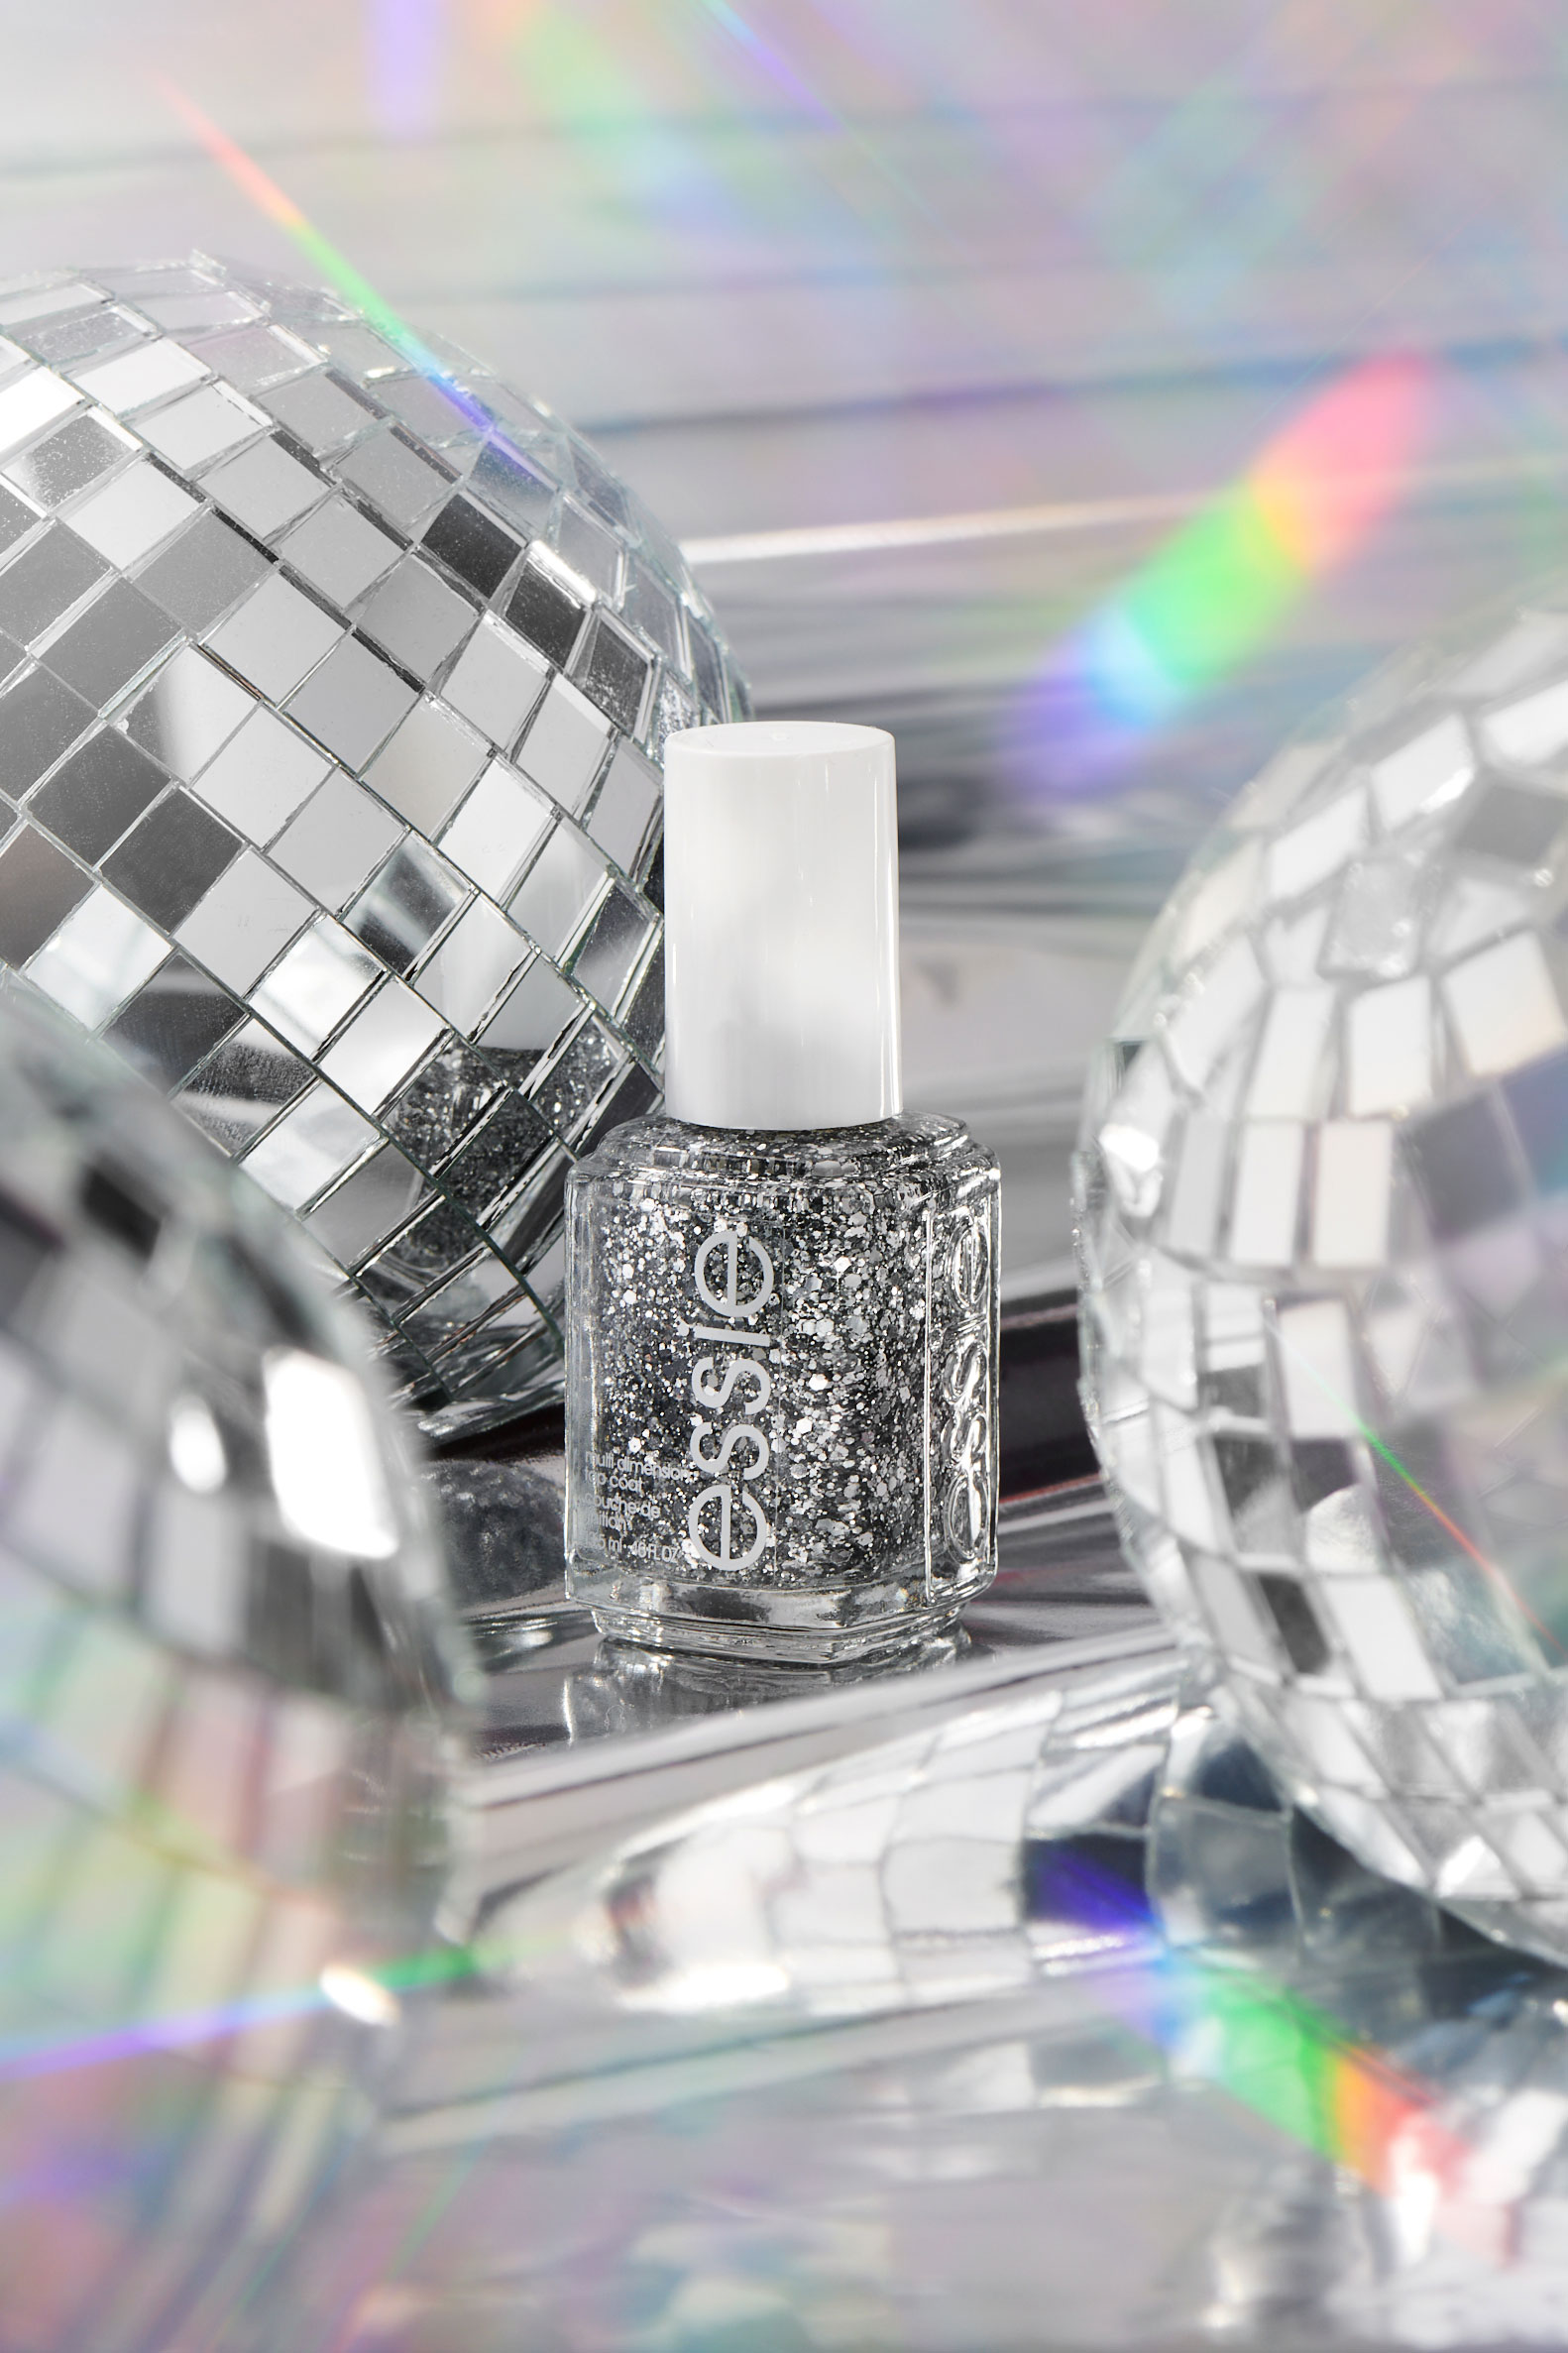 Silver glitter essie brand nail polish bottle with disco balls